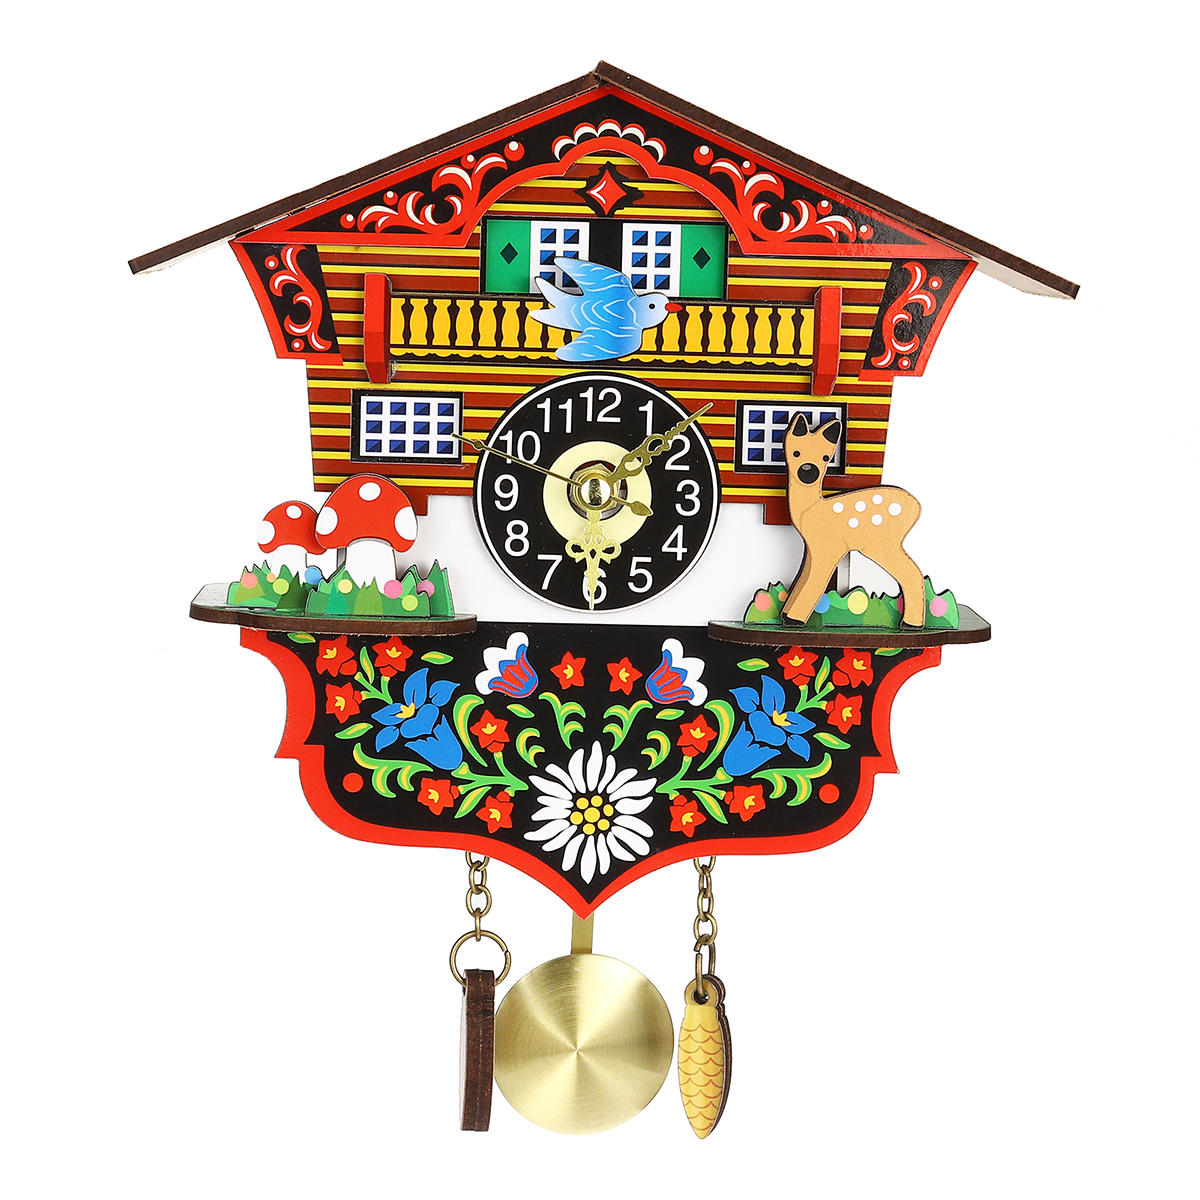 

KB-002 Wooden Cuckoo Clock 3D Swing Clock Cartoon Wall Clock Bird Time Bell Alarm Watch